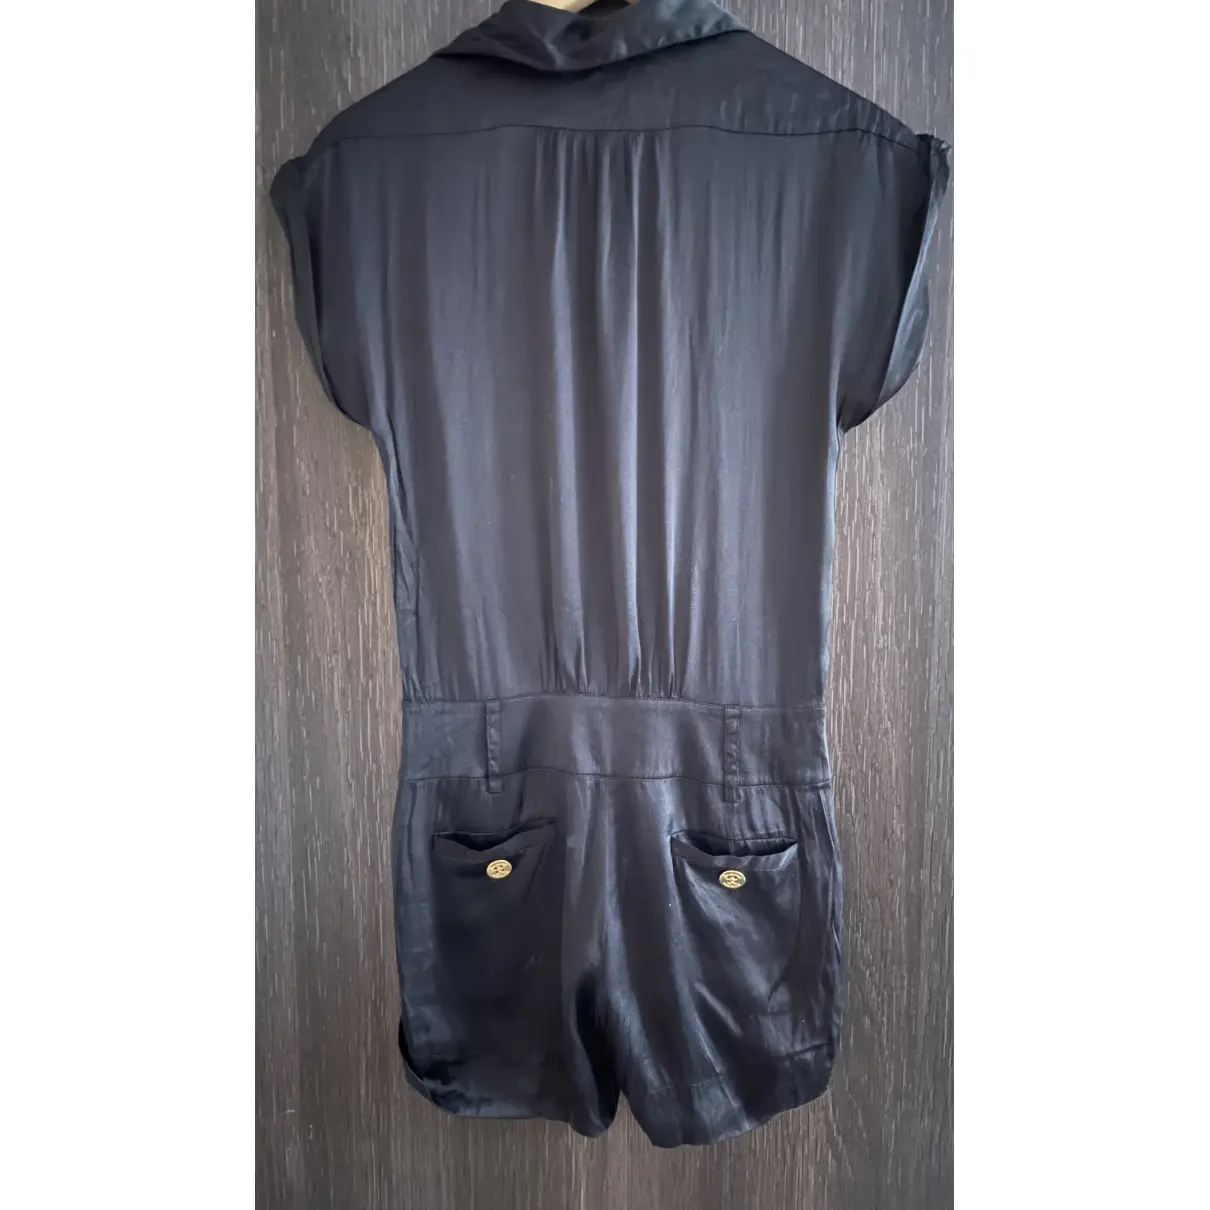 Buy GUESS Silk jumpsuit online